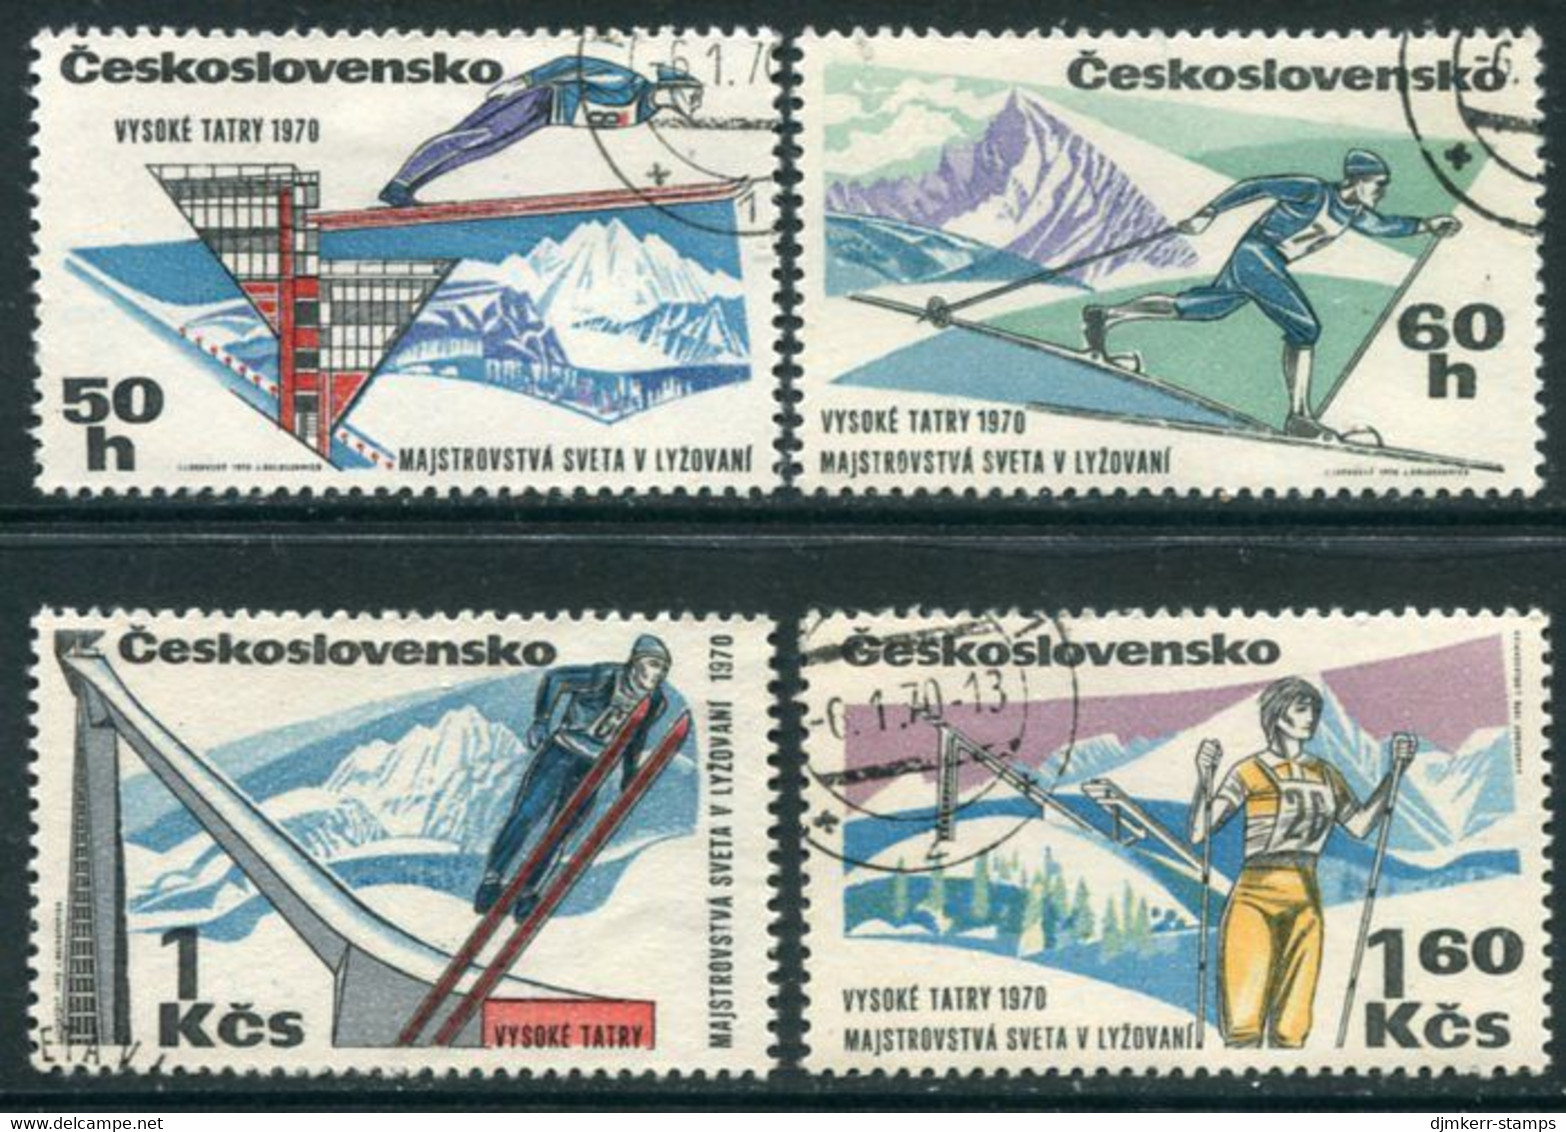 CZECHOSLOVAKIA 1970 Skiing World Championship Used Michel 1916-18 - Usados